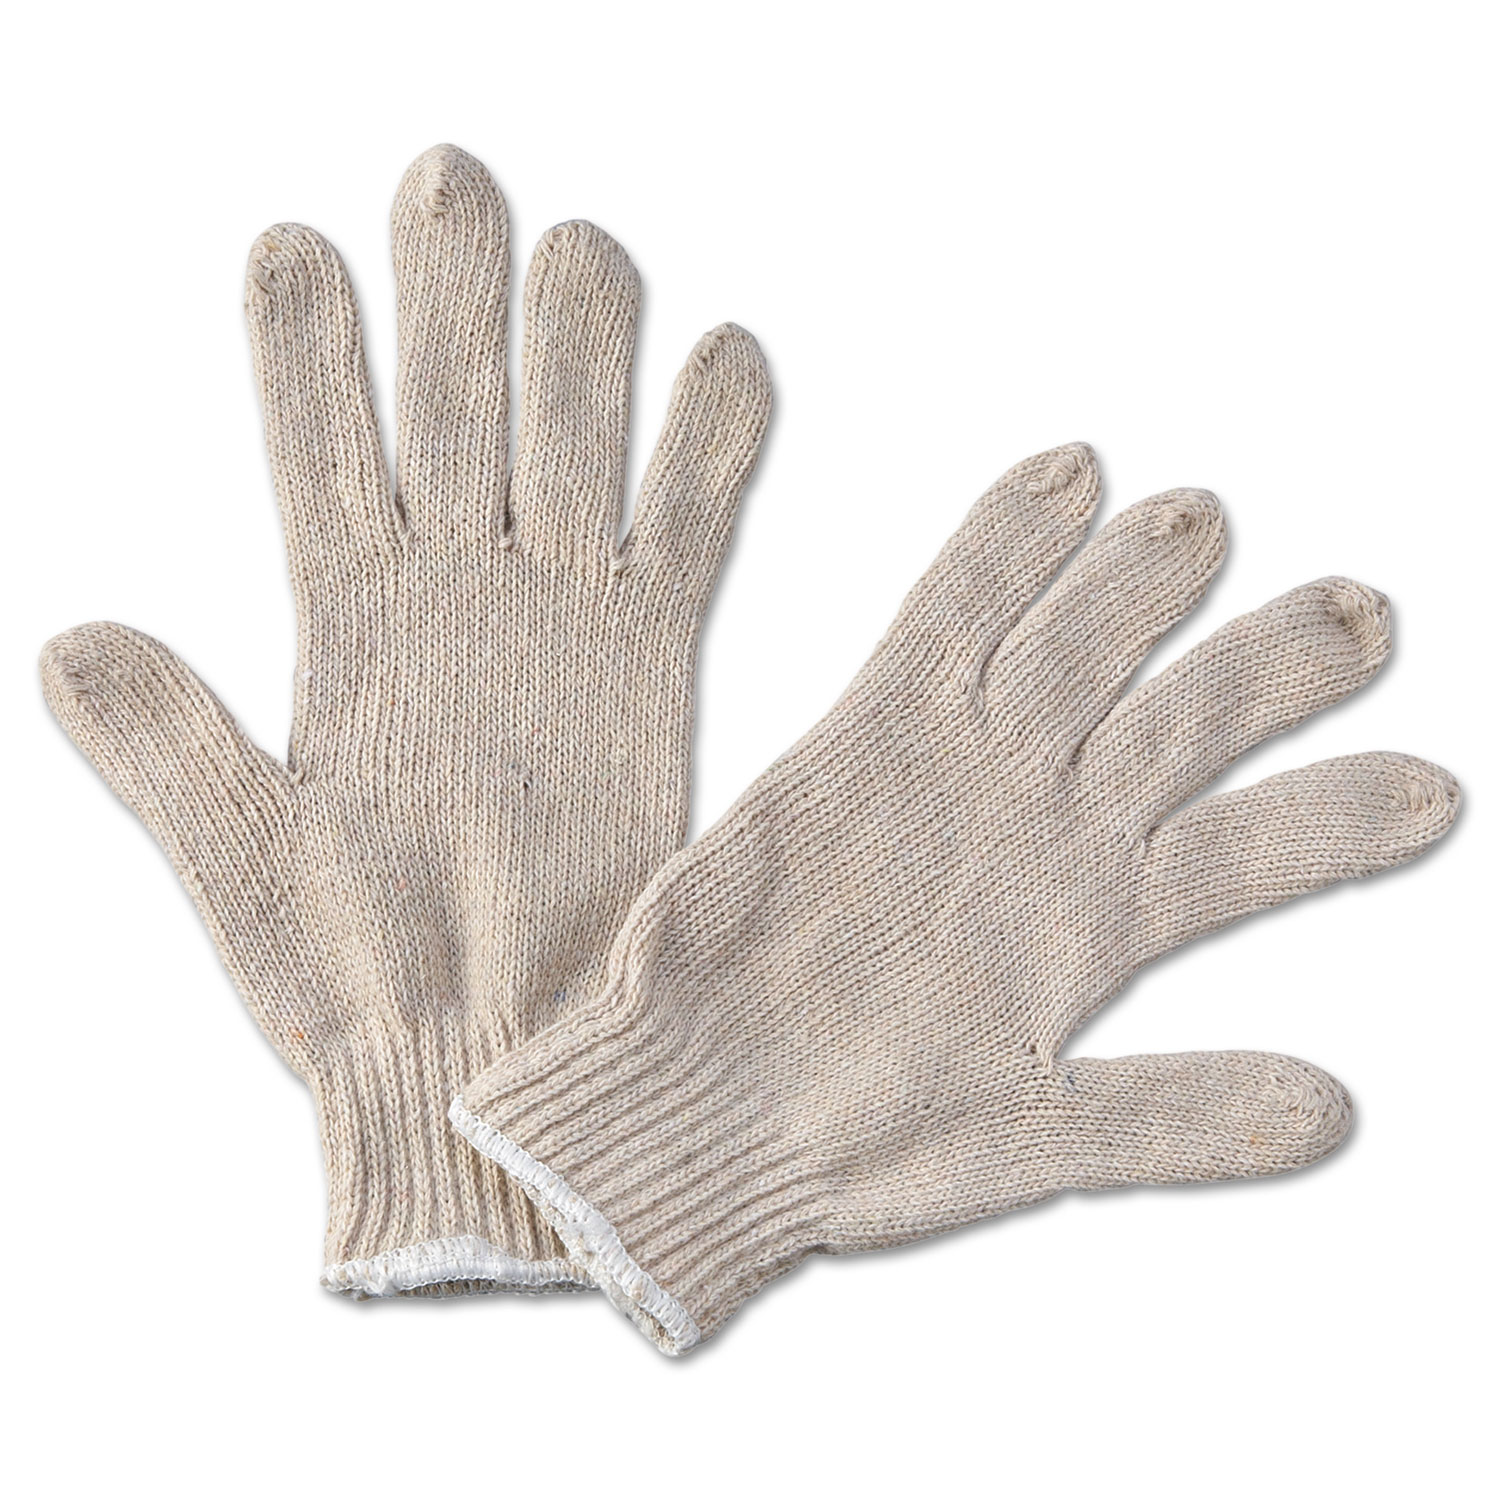  Boardwalk BWK782 String Knit General Purpose Gloves, Large, Natural, 12 Pairs (BWK782) 